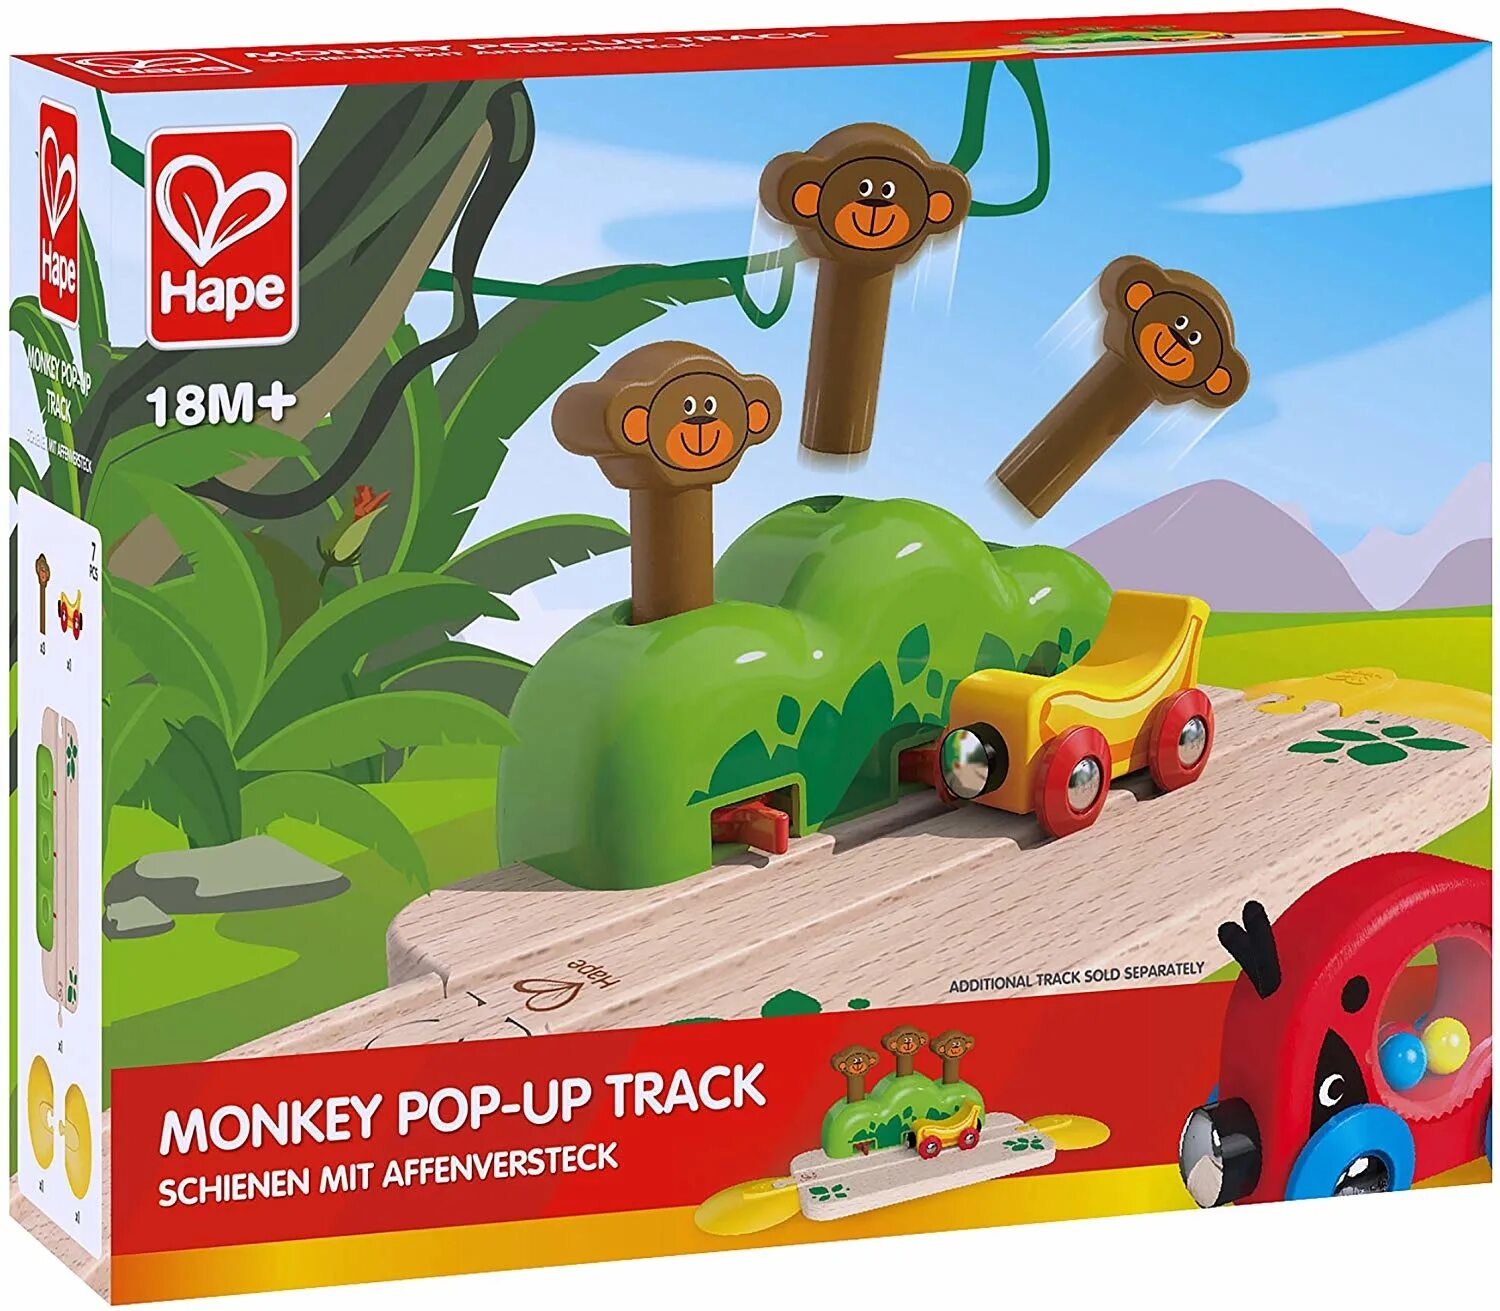 Popping track. Трек Hape. Monkey Pop. Hape обезьяны. Обезьяний трек игрушка.